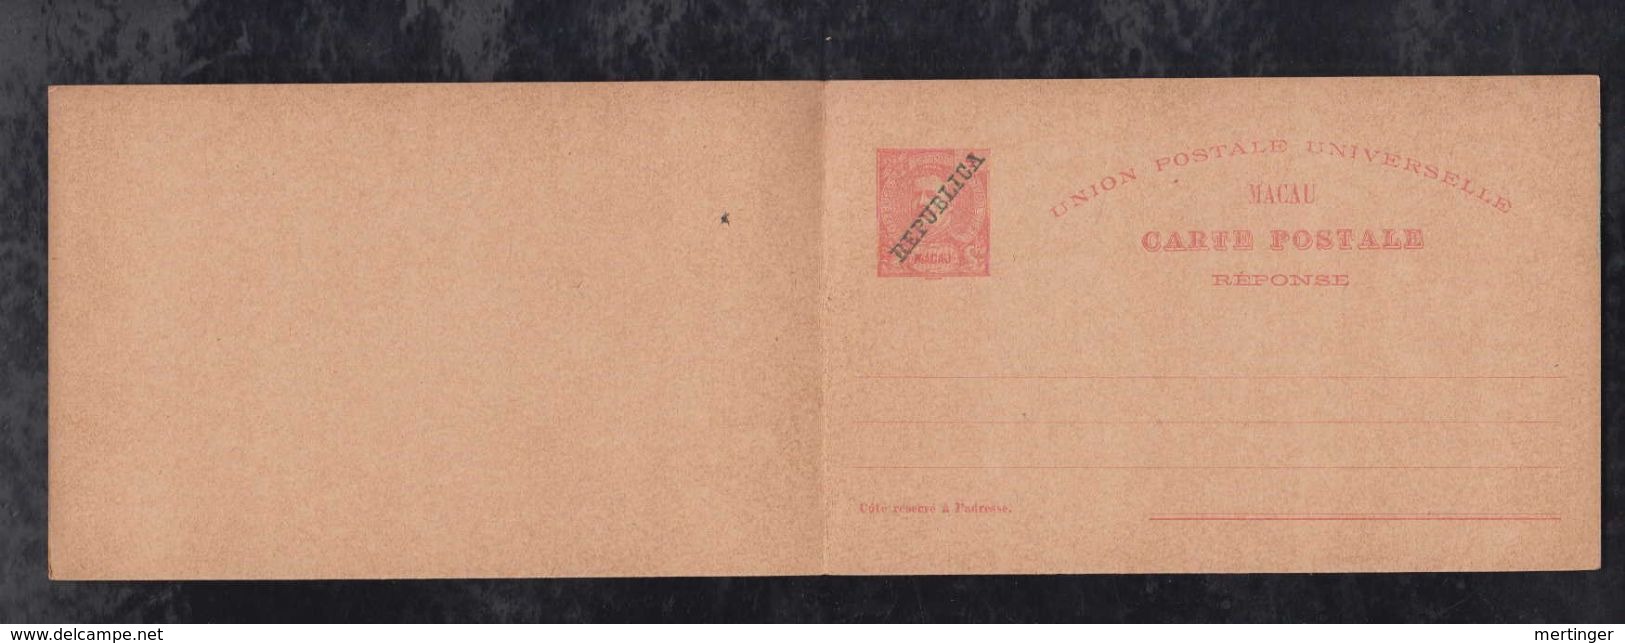 Portugal MACAU China 1910 overprint REPUBLICA 6 postcard stationery ** MNH